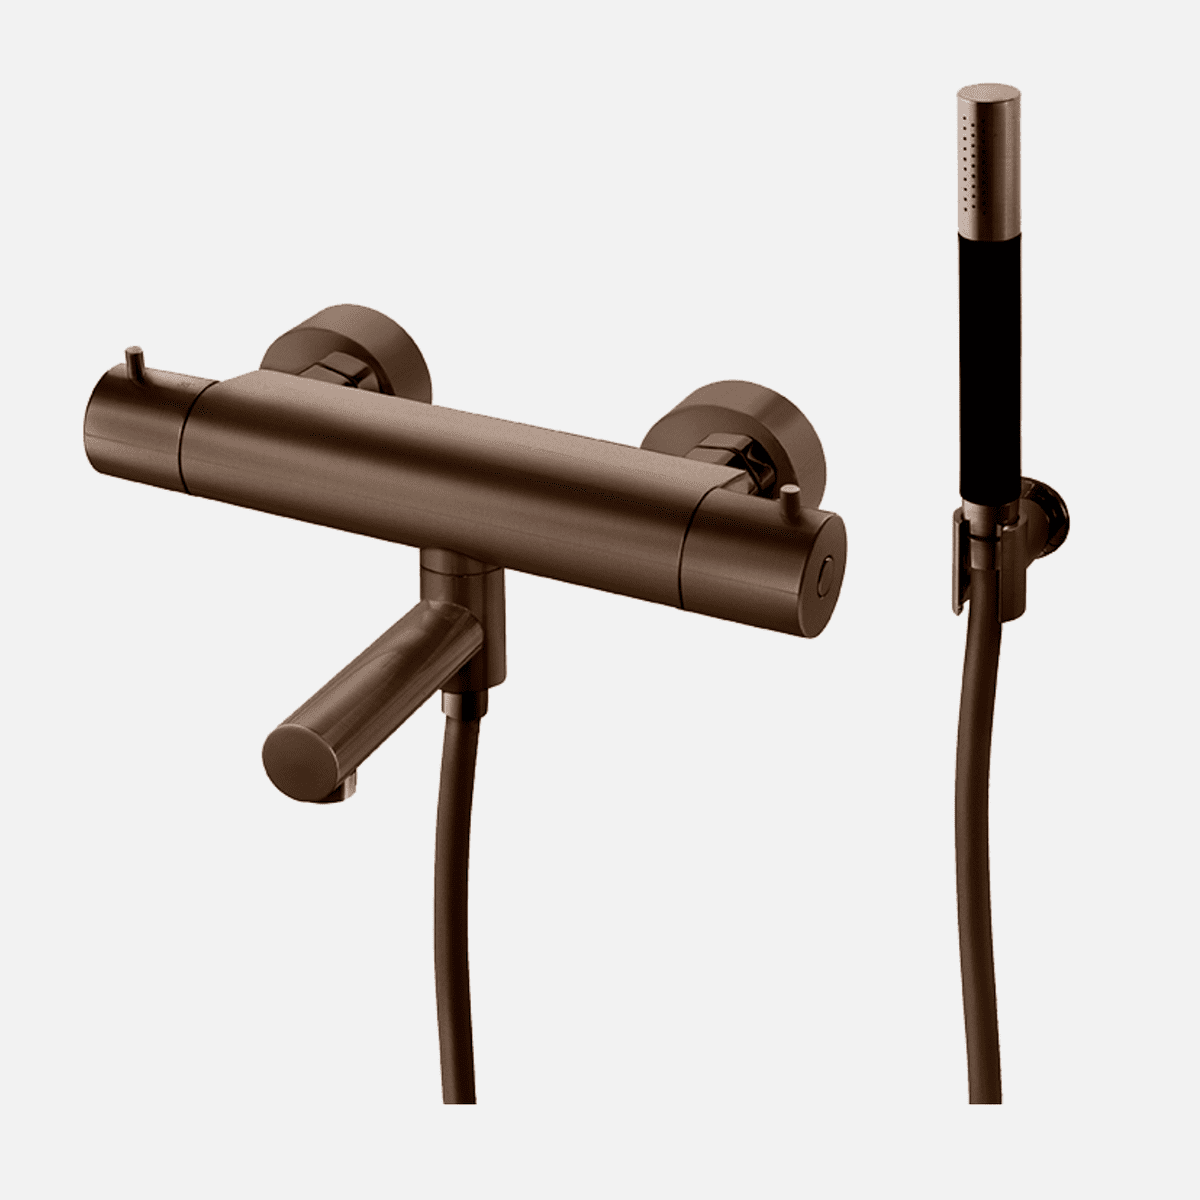 Se Tapwell EVM026-150 kararmatur med håndbruser - bronze hos Bad&Design